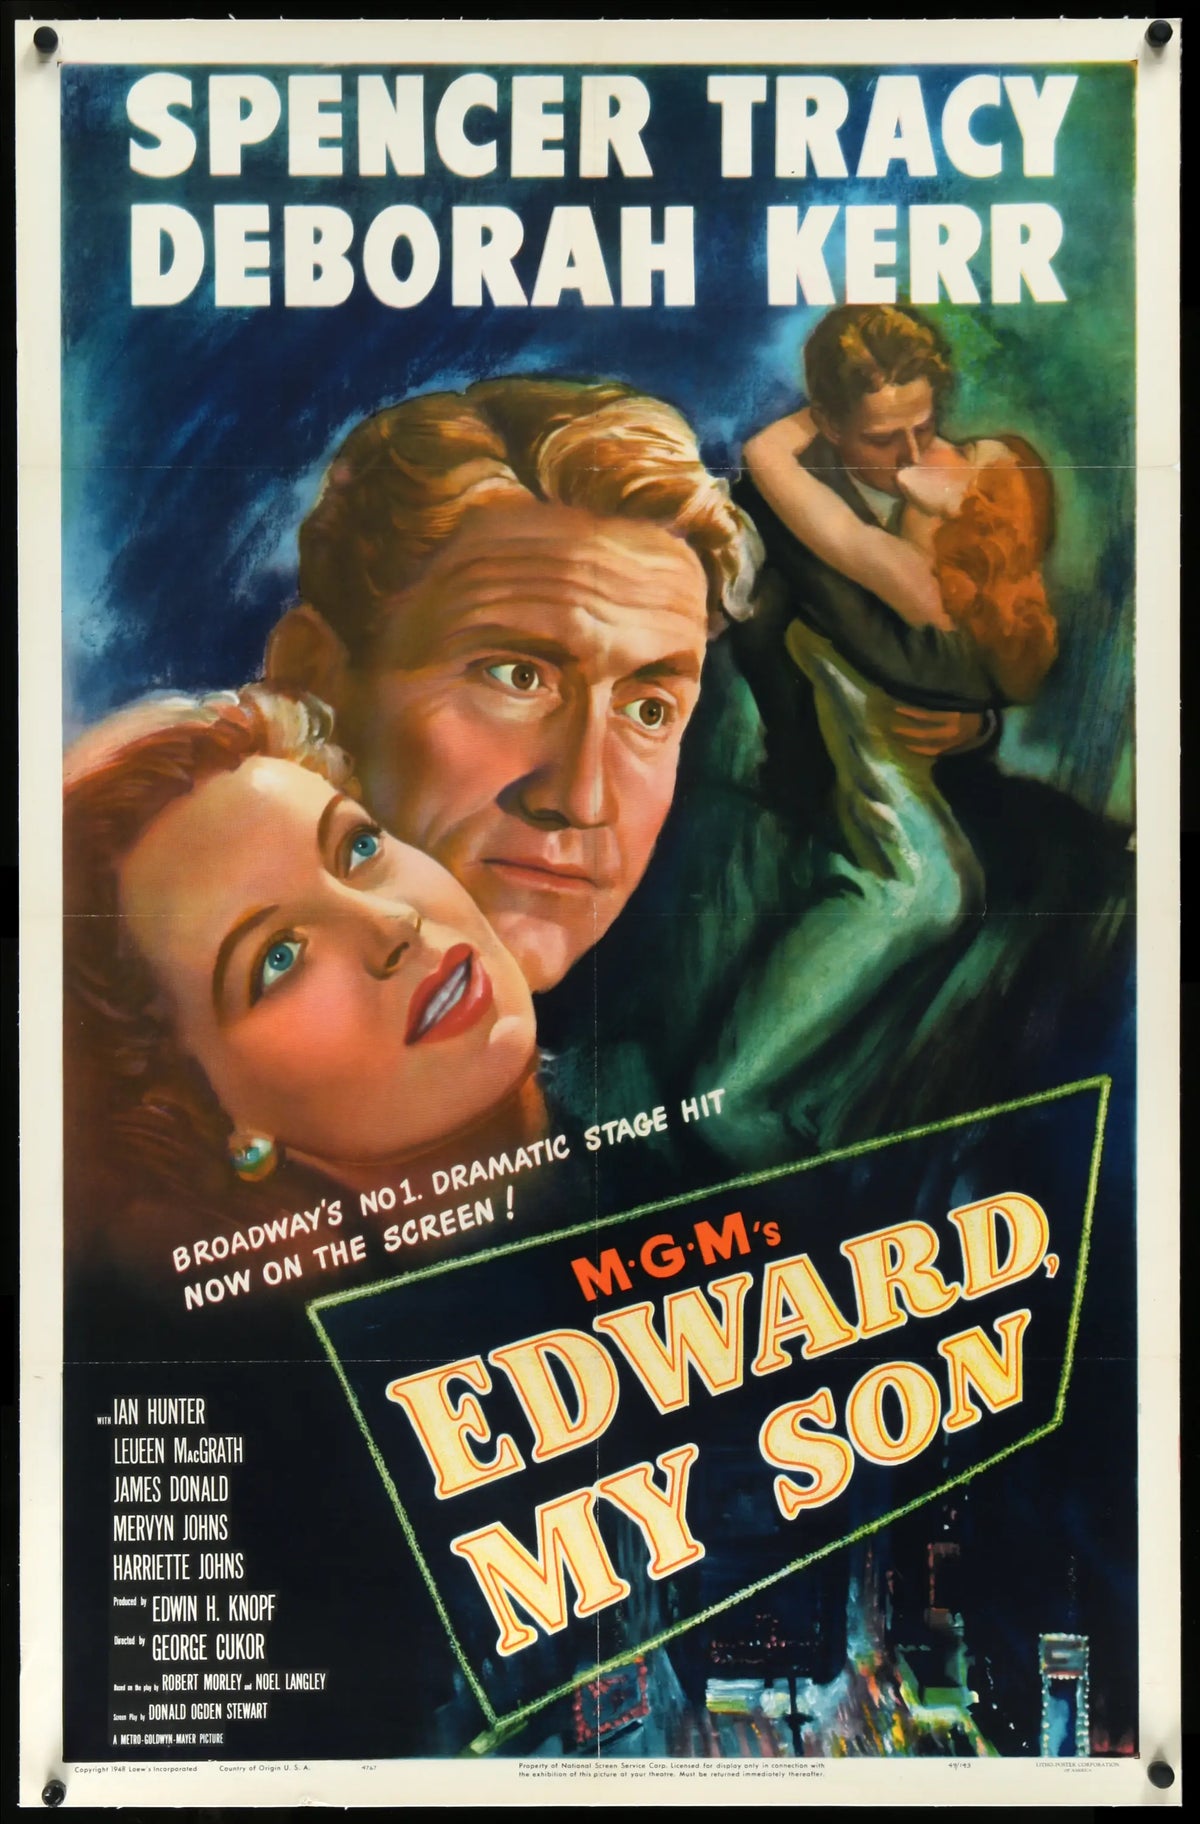 Edward, My Son (1949) original movie poster for sale at Original Film Art